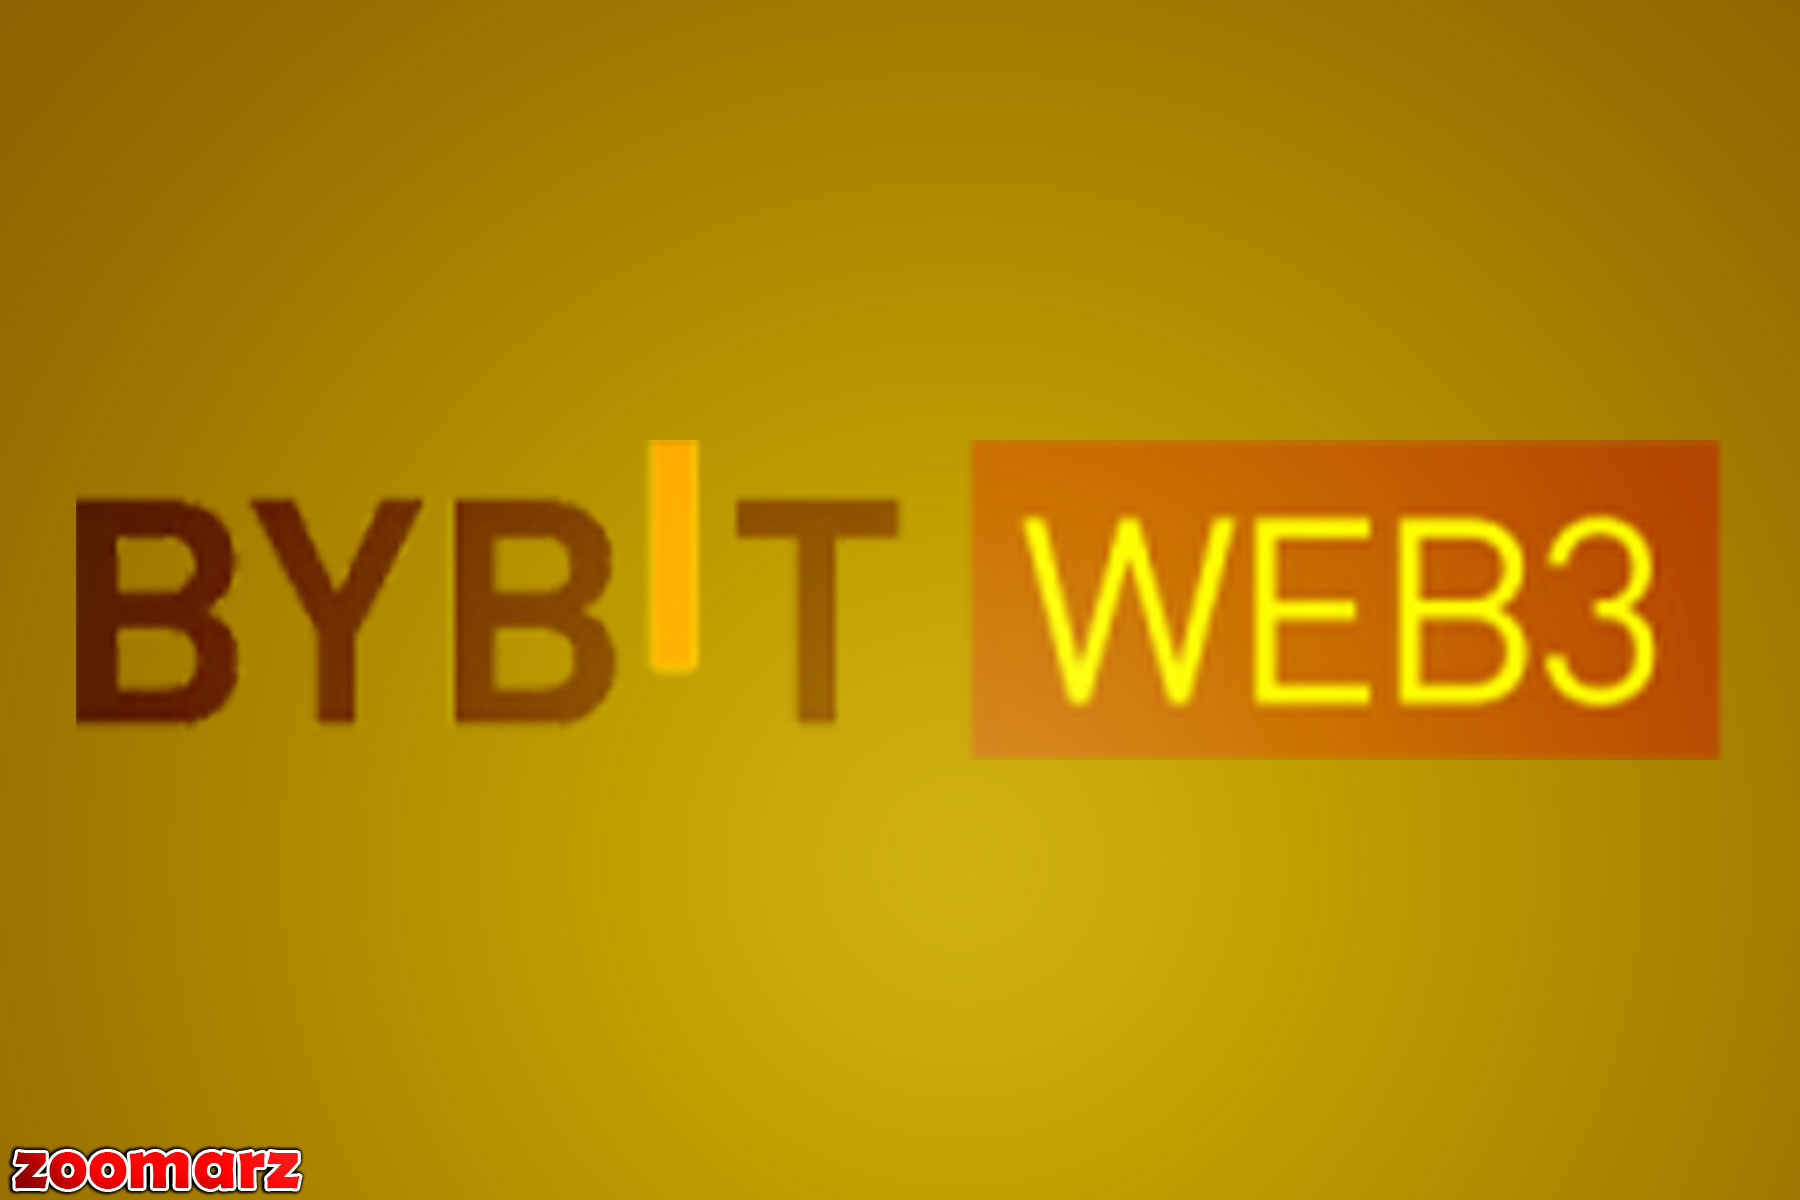 Bybit در جشن یک میلیون کاربر، از کیف پول بدون کلید خود در بستر Bybit Web3 رونمایی کرد.🤩